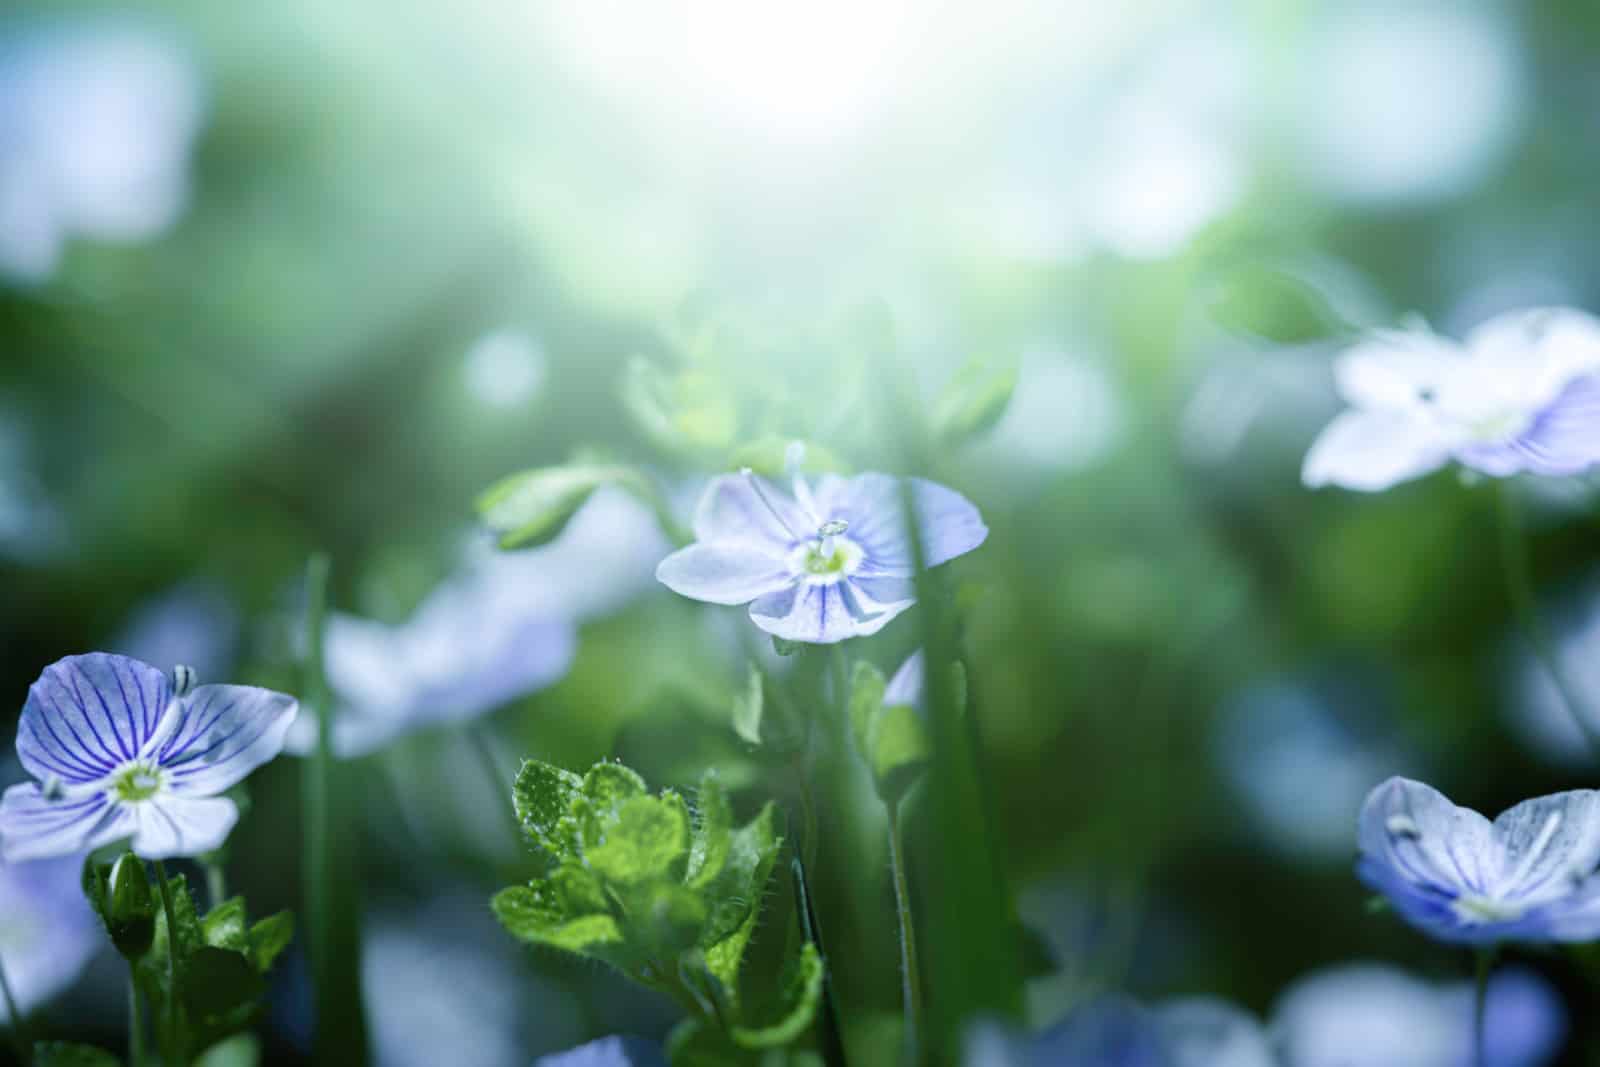 Veronica filiformis flowers